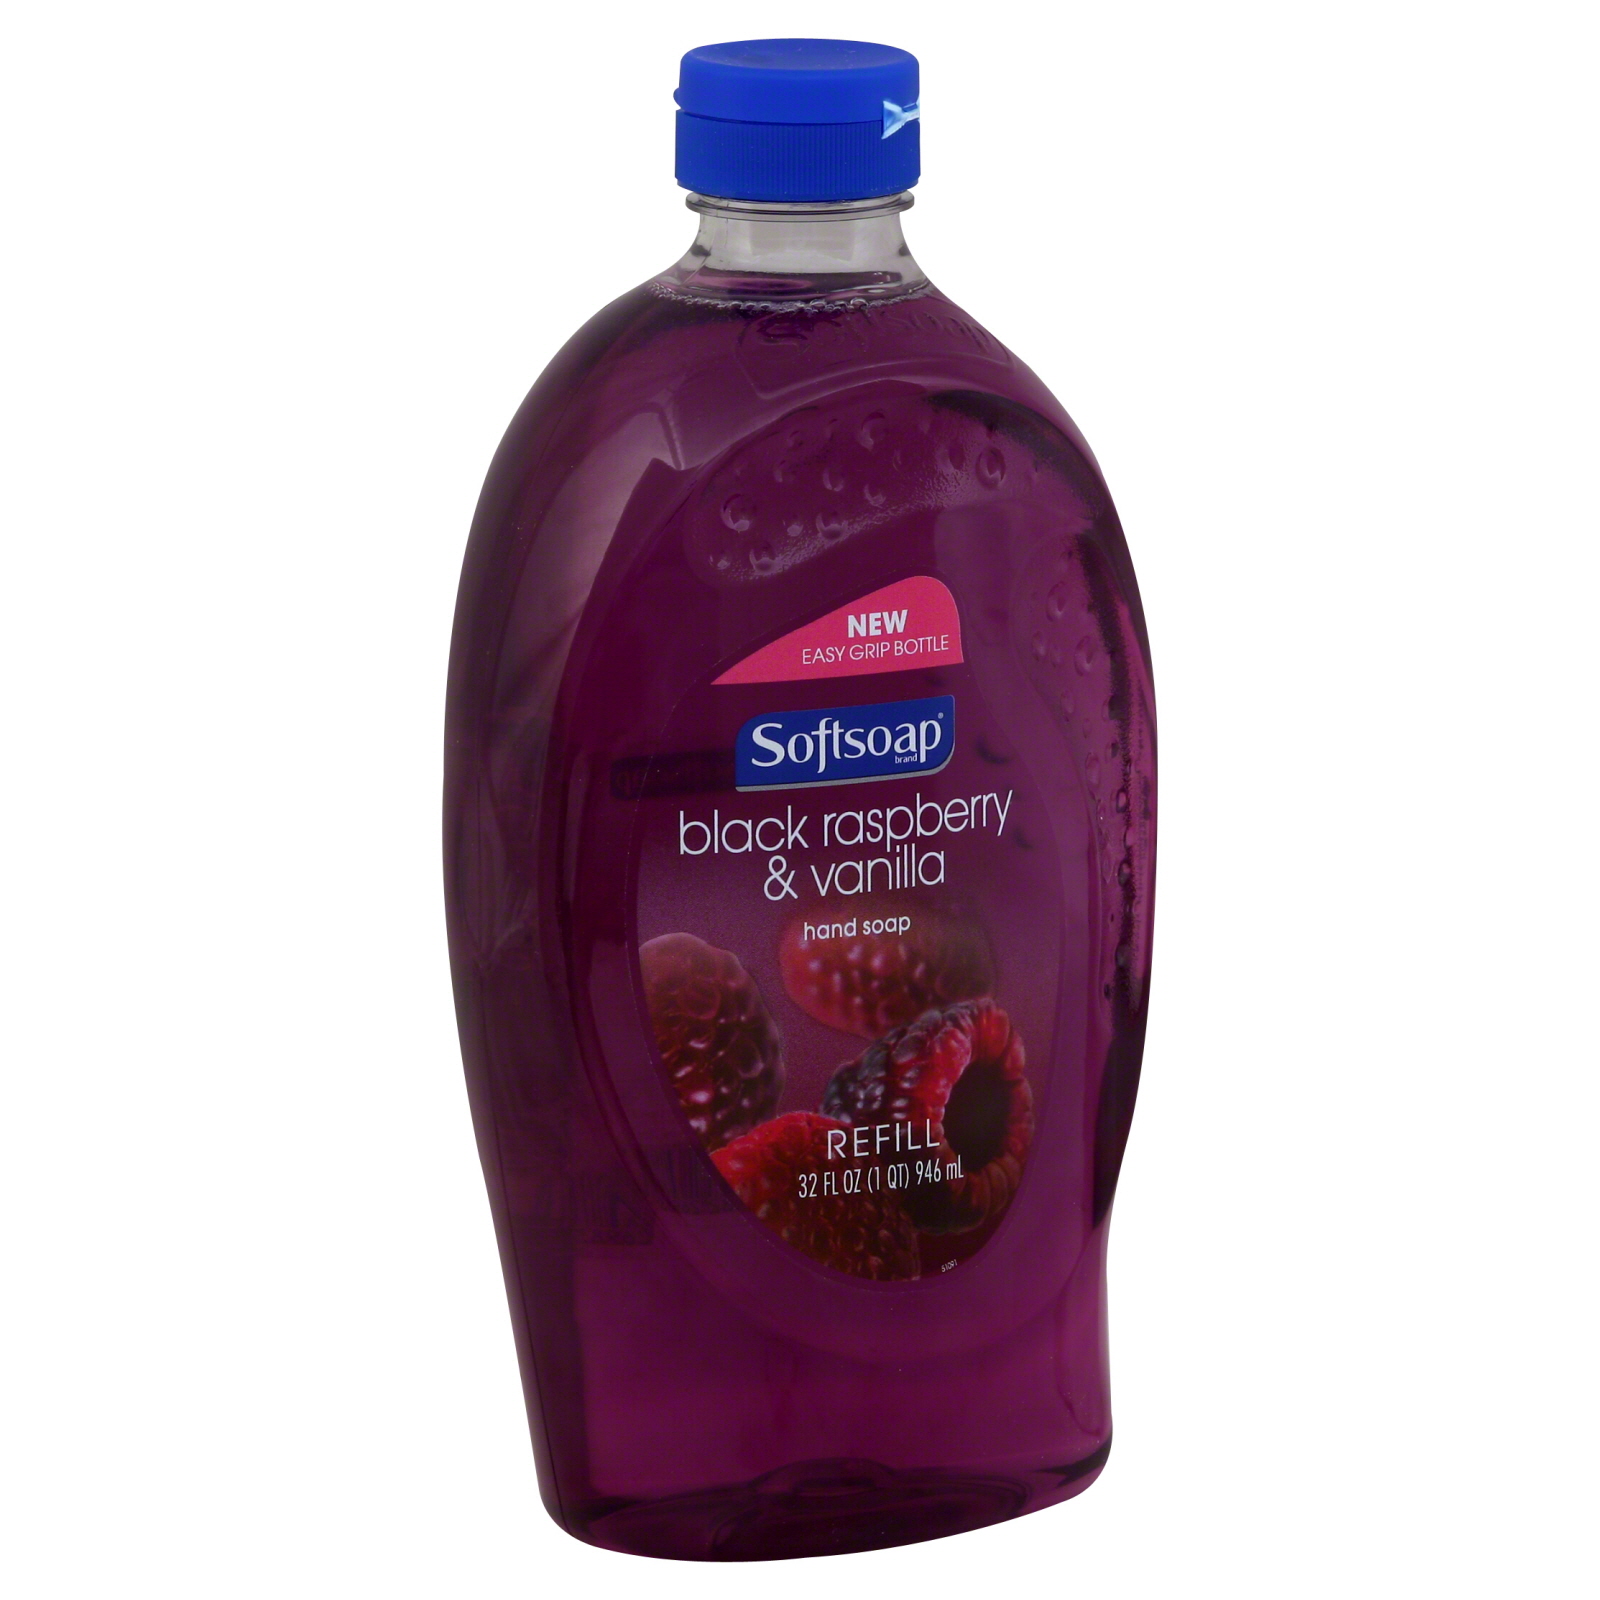 Softsoap Hand Soap, Black Raspberry & Vanilla, Refill, 32 oz.